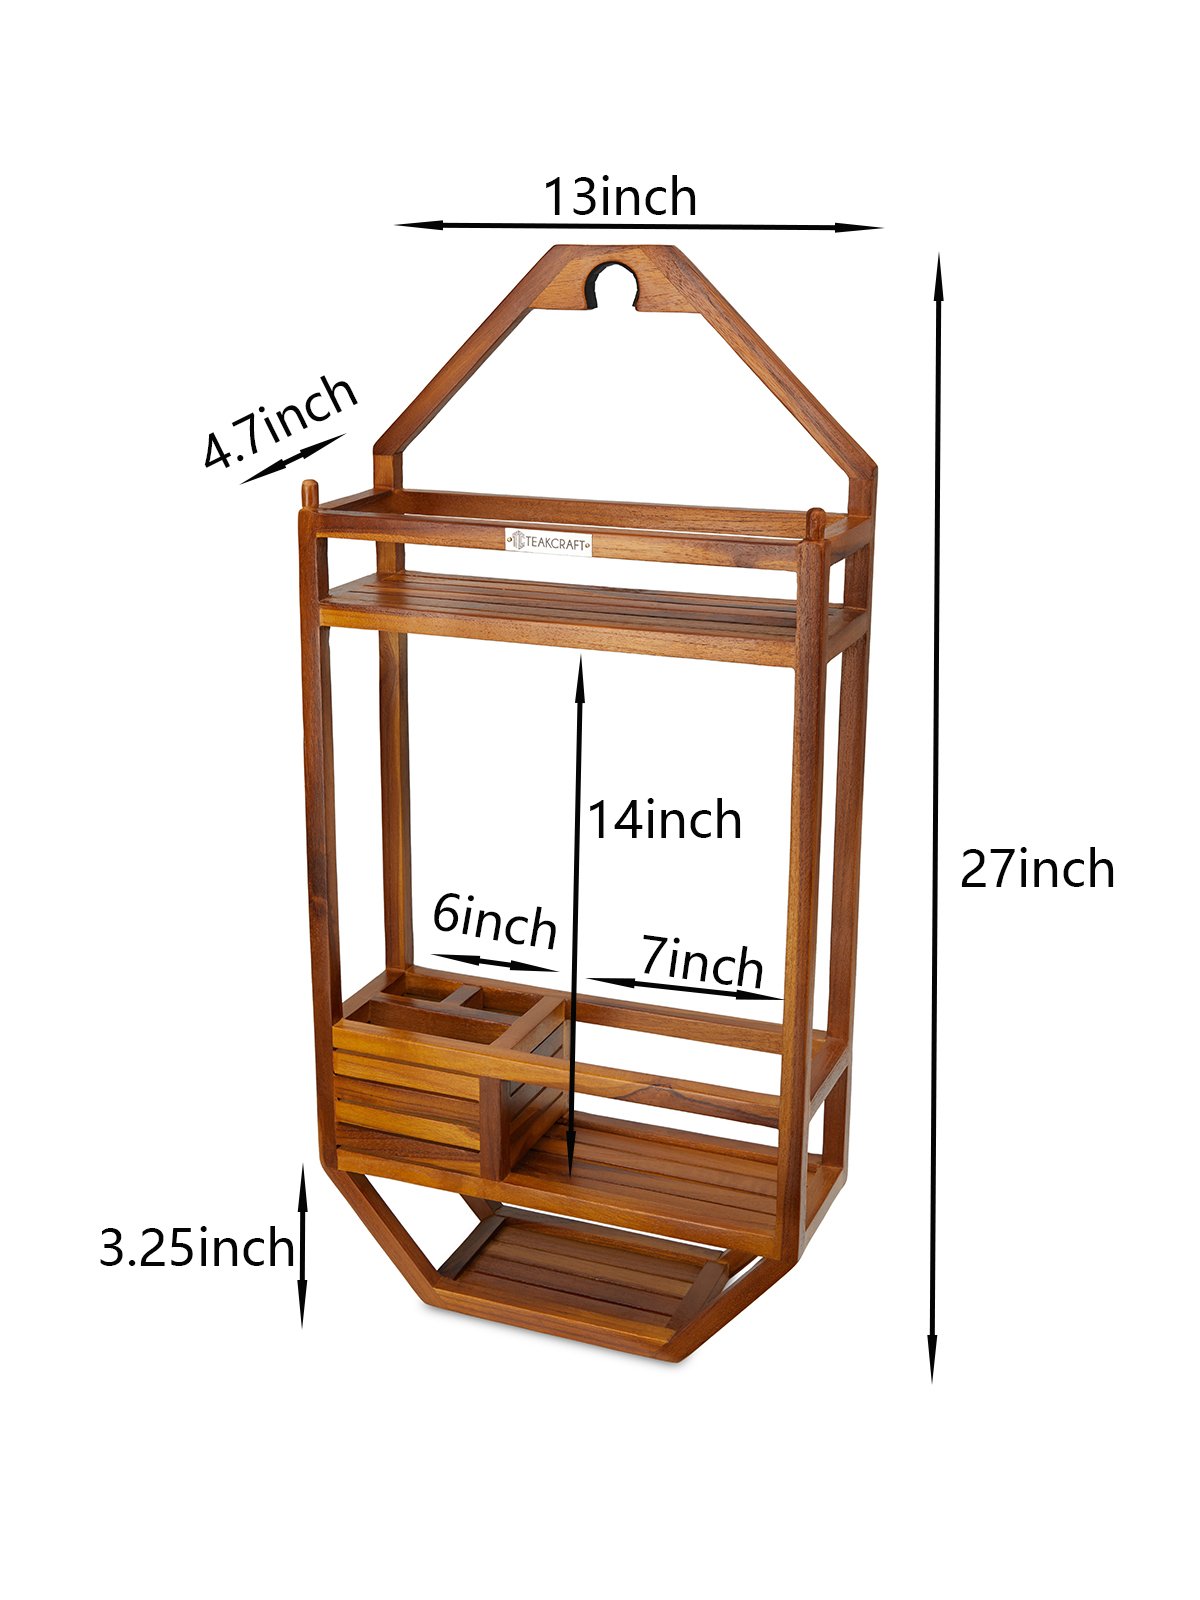 Utoplike Teak Shower Caddy Corner, 3 Tier Standing Shower Organizer Shelf with Handle, Wood Bathroom Stand Up Caddy Basket for Shampoo, Rack for